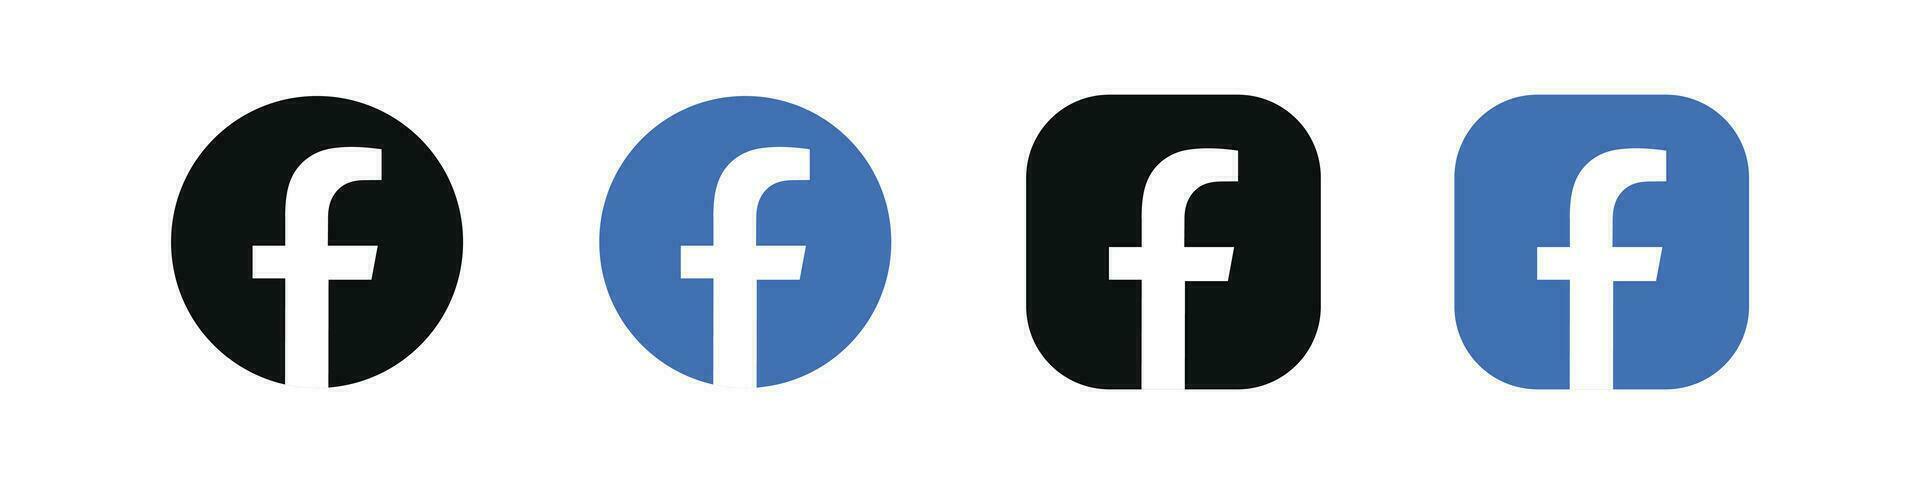 Facebook icons.  Facebook logo. Facebook flat icons isolated on white background. Facebook vector logo icon set.